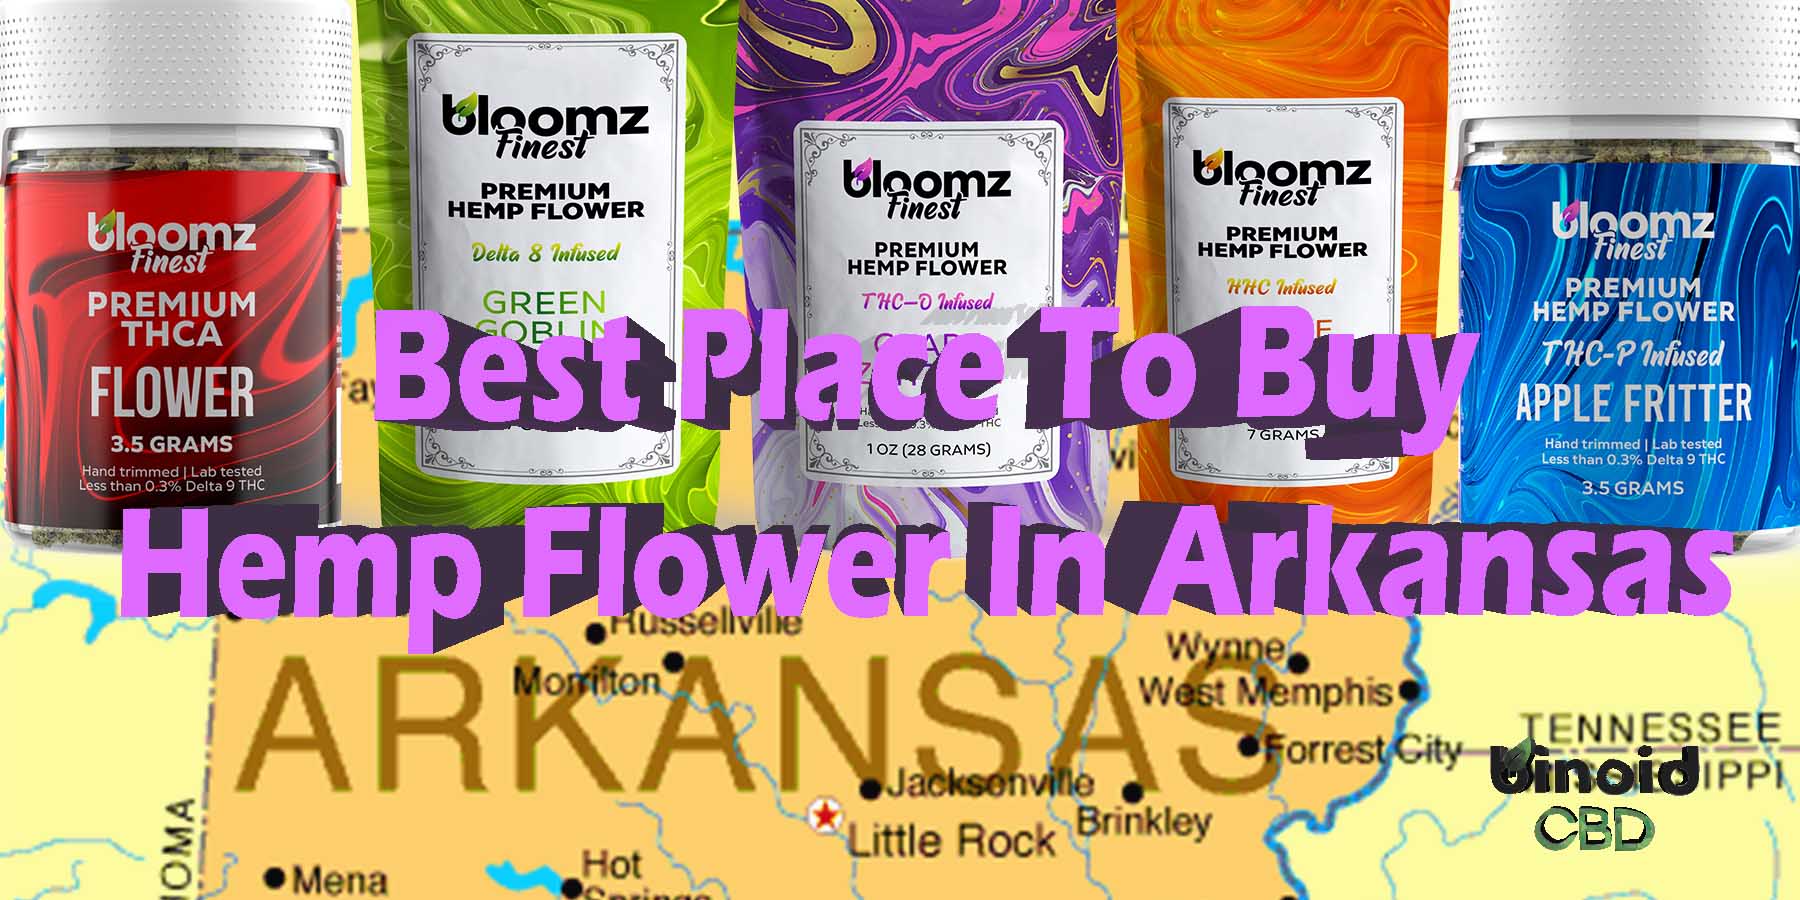 Buy Hemp Flower Arkansas Joints PreRolls Get Online Near Me For Sale Best Brand Strongest Real Legal Store Shop Reddit